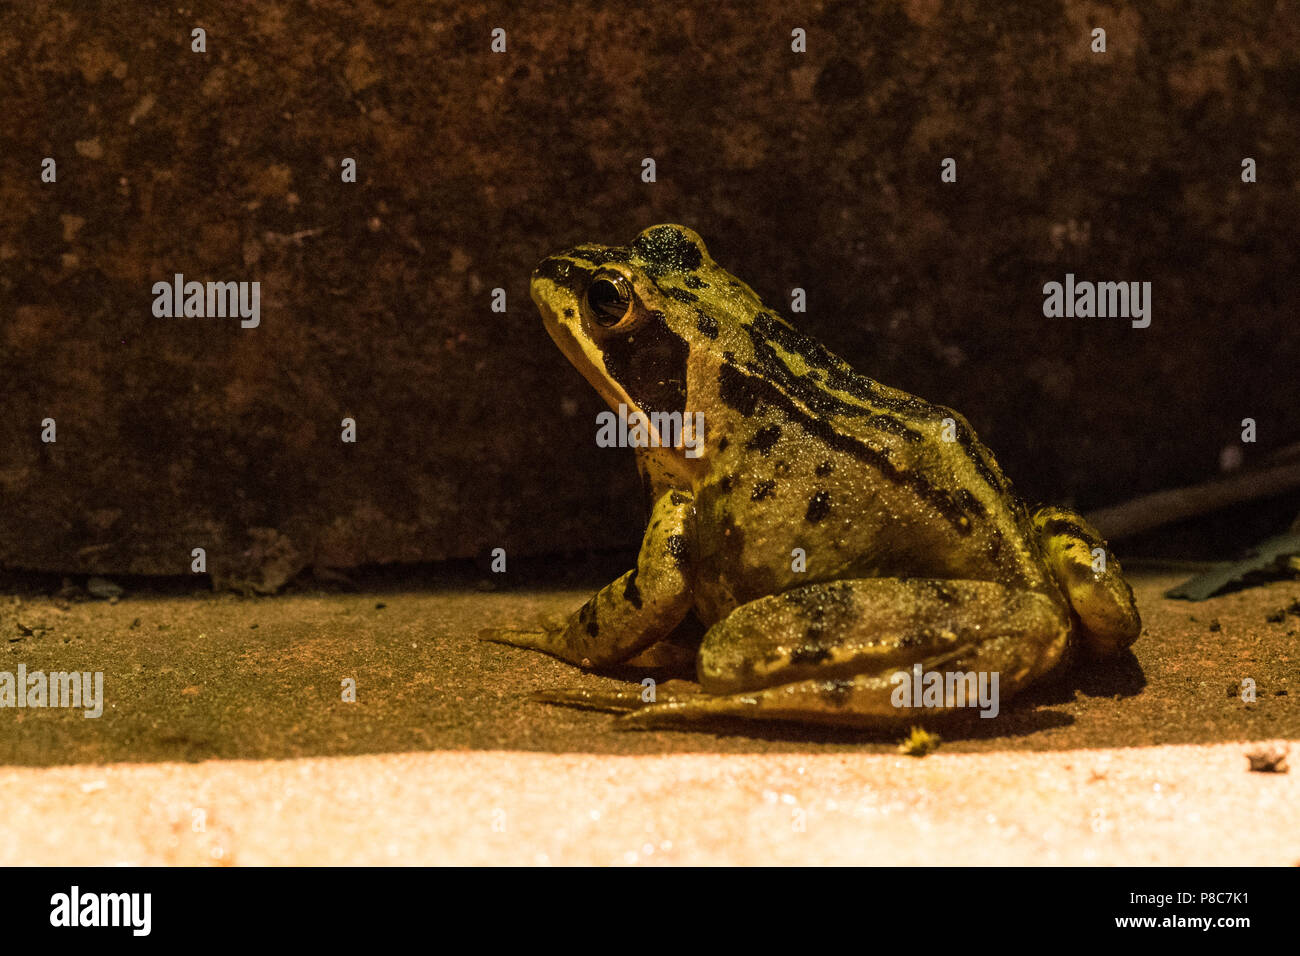 garden wildlife uk at night - a common frog (Rana temporaria' sitting outside house at night Stock Photo